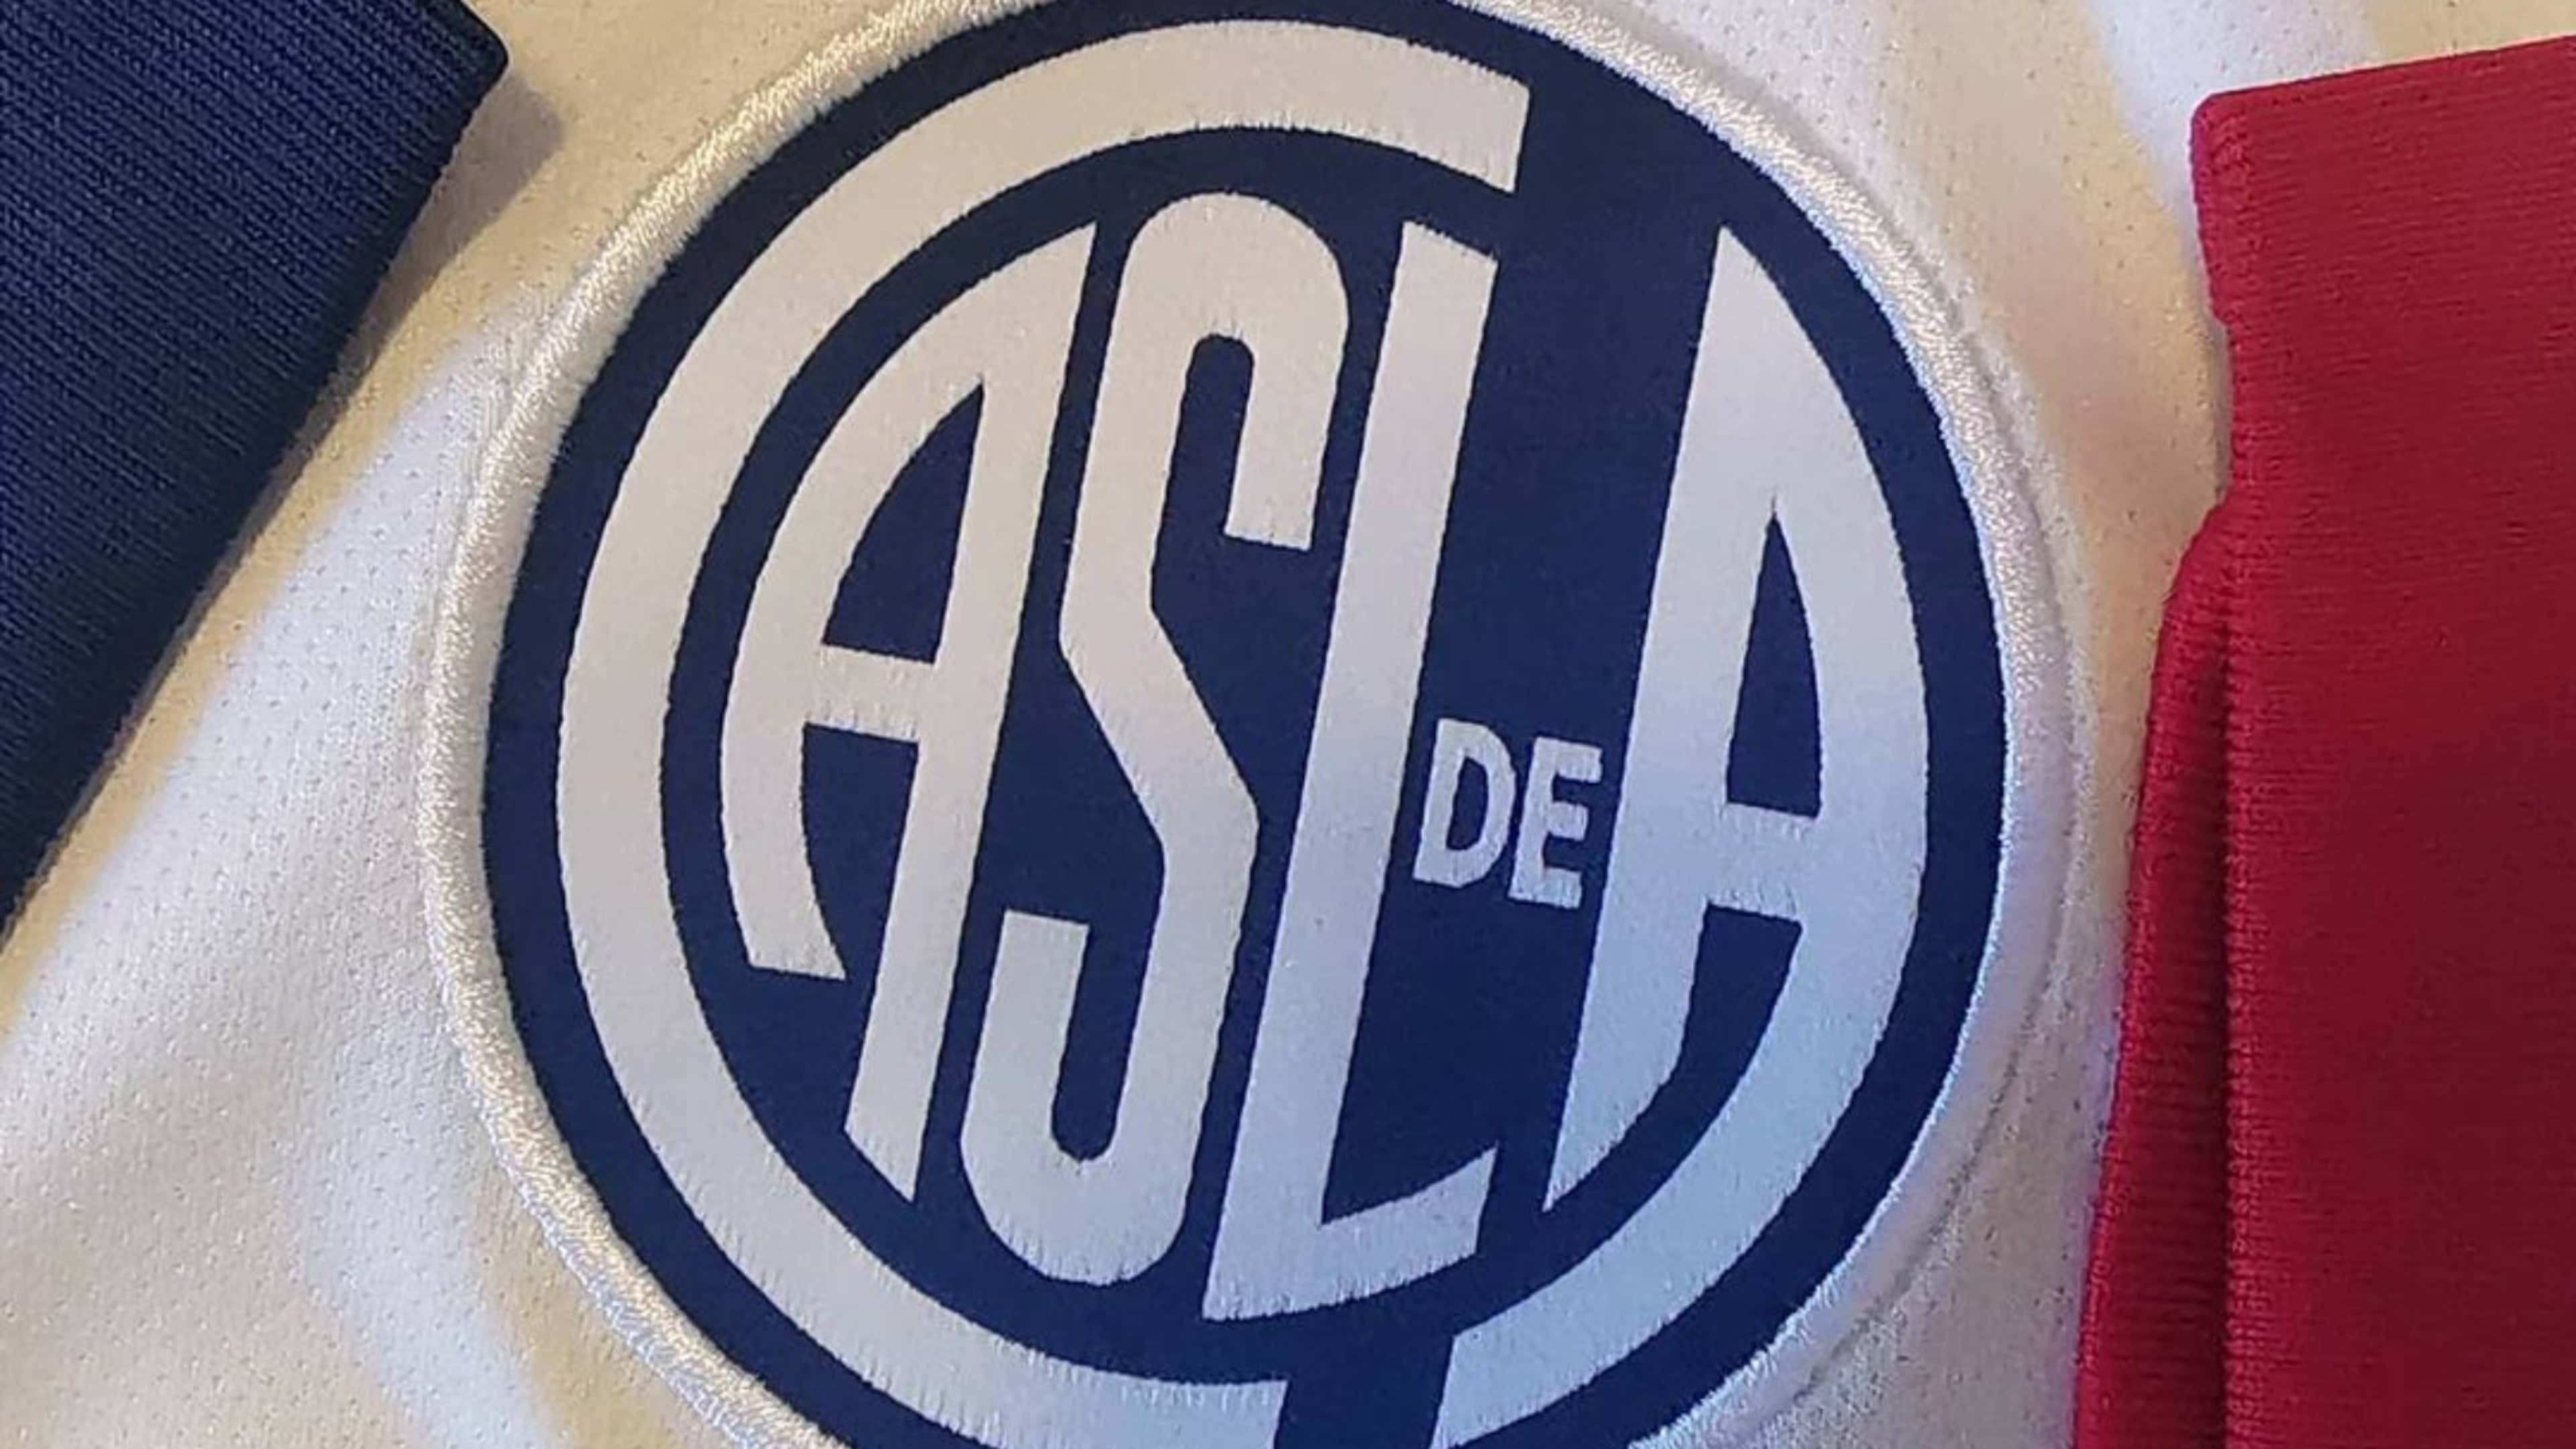 Club Atlético San Lorenzo de Almagro - Sitio Oficial  Escudos de futbol  argentino, Club san lorenzo de almagro, Cuervo san lorenzo